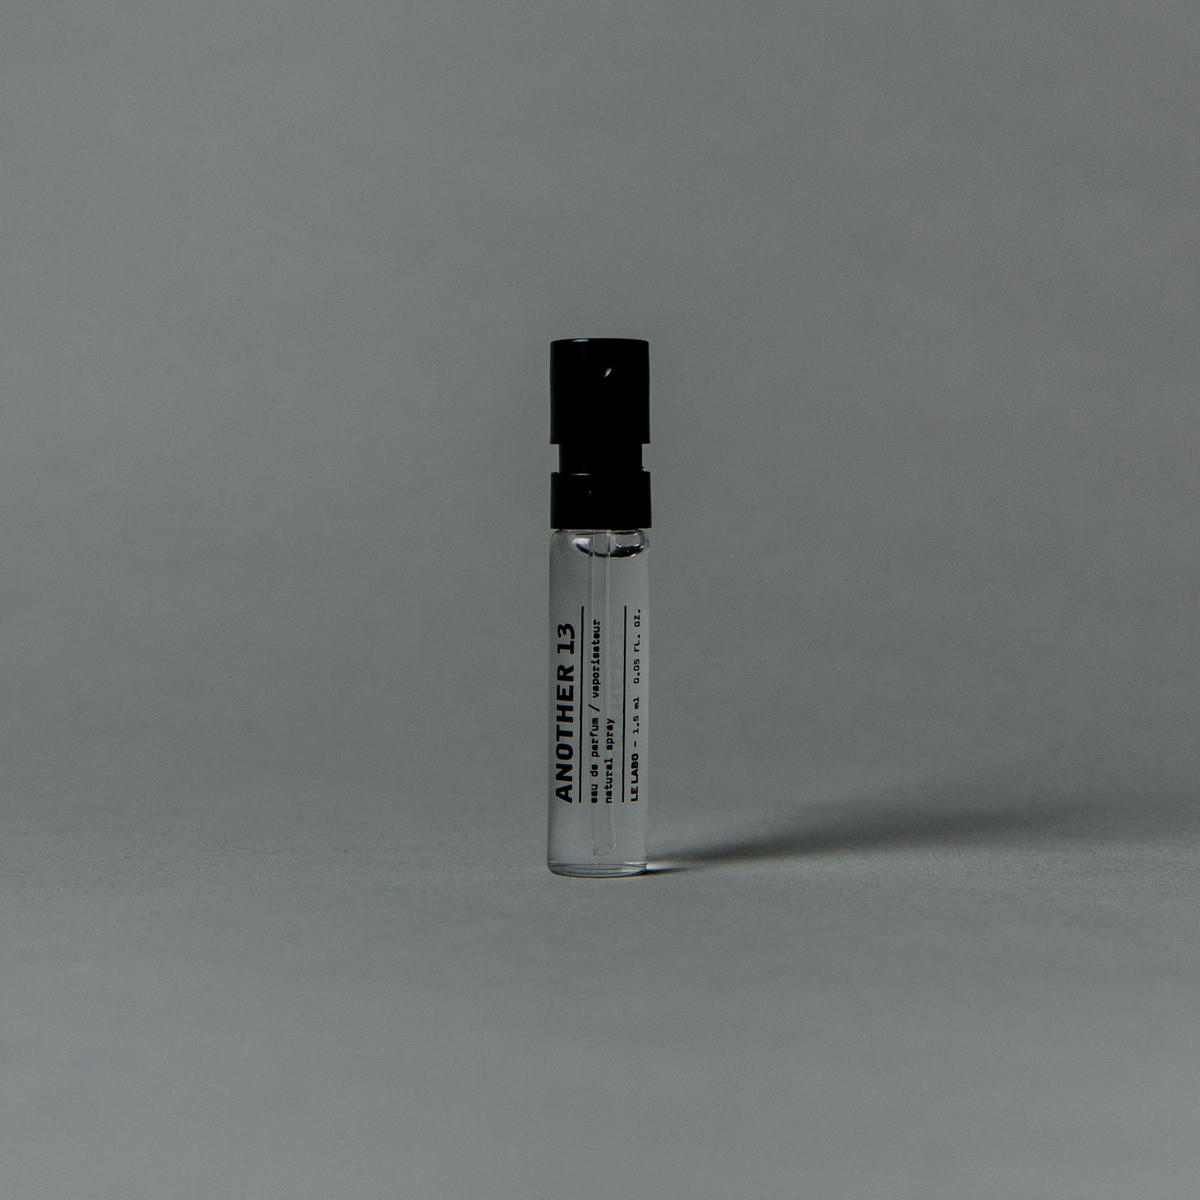 ANOTHER 13 | Le Labo Fragrances